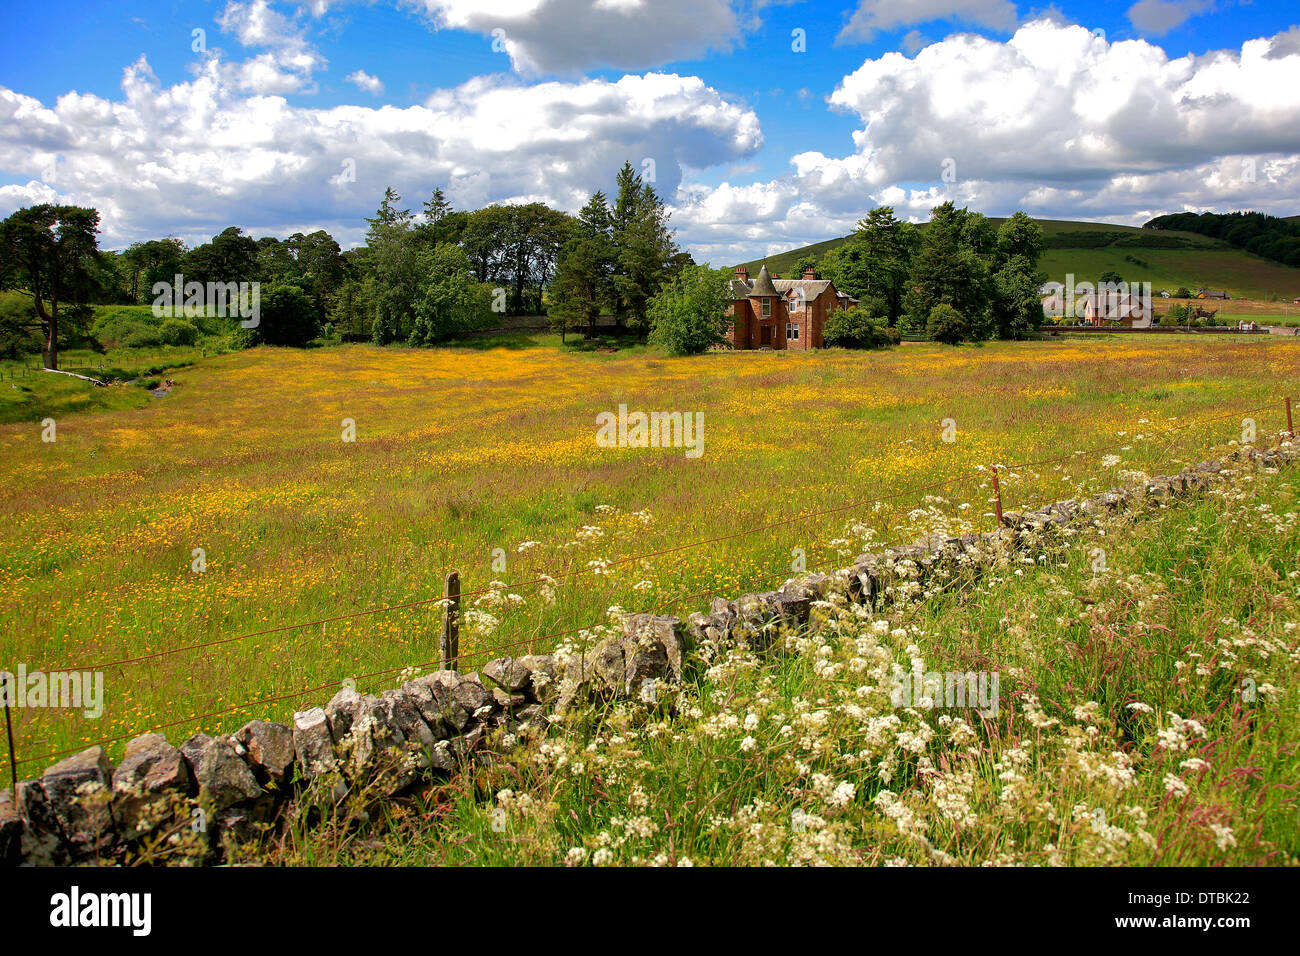 Sommer Blumen Wiese Thankerton Dorf oberen Tweeddale Schottland Großbritannien UK Stockfoto